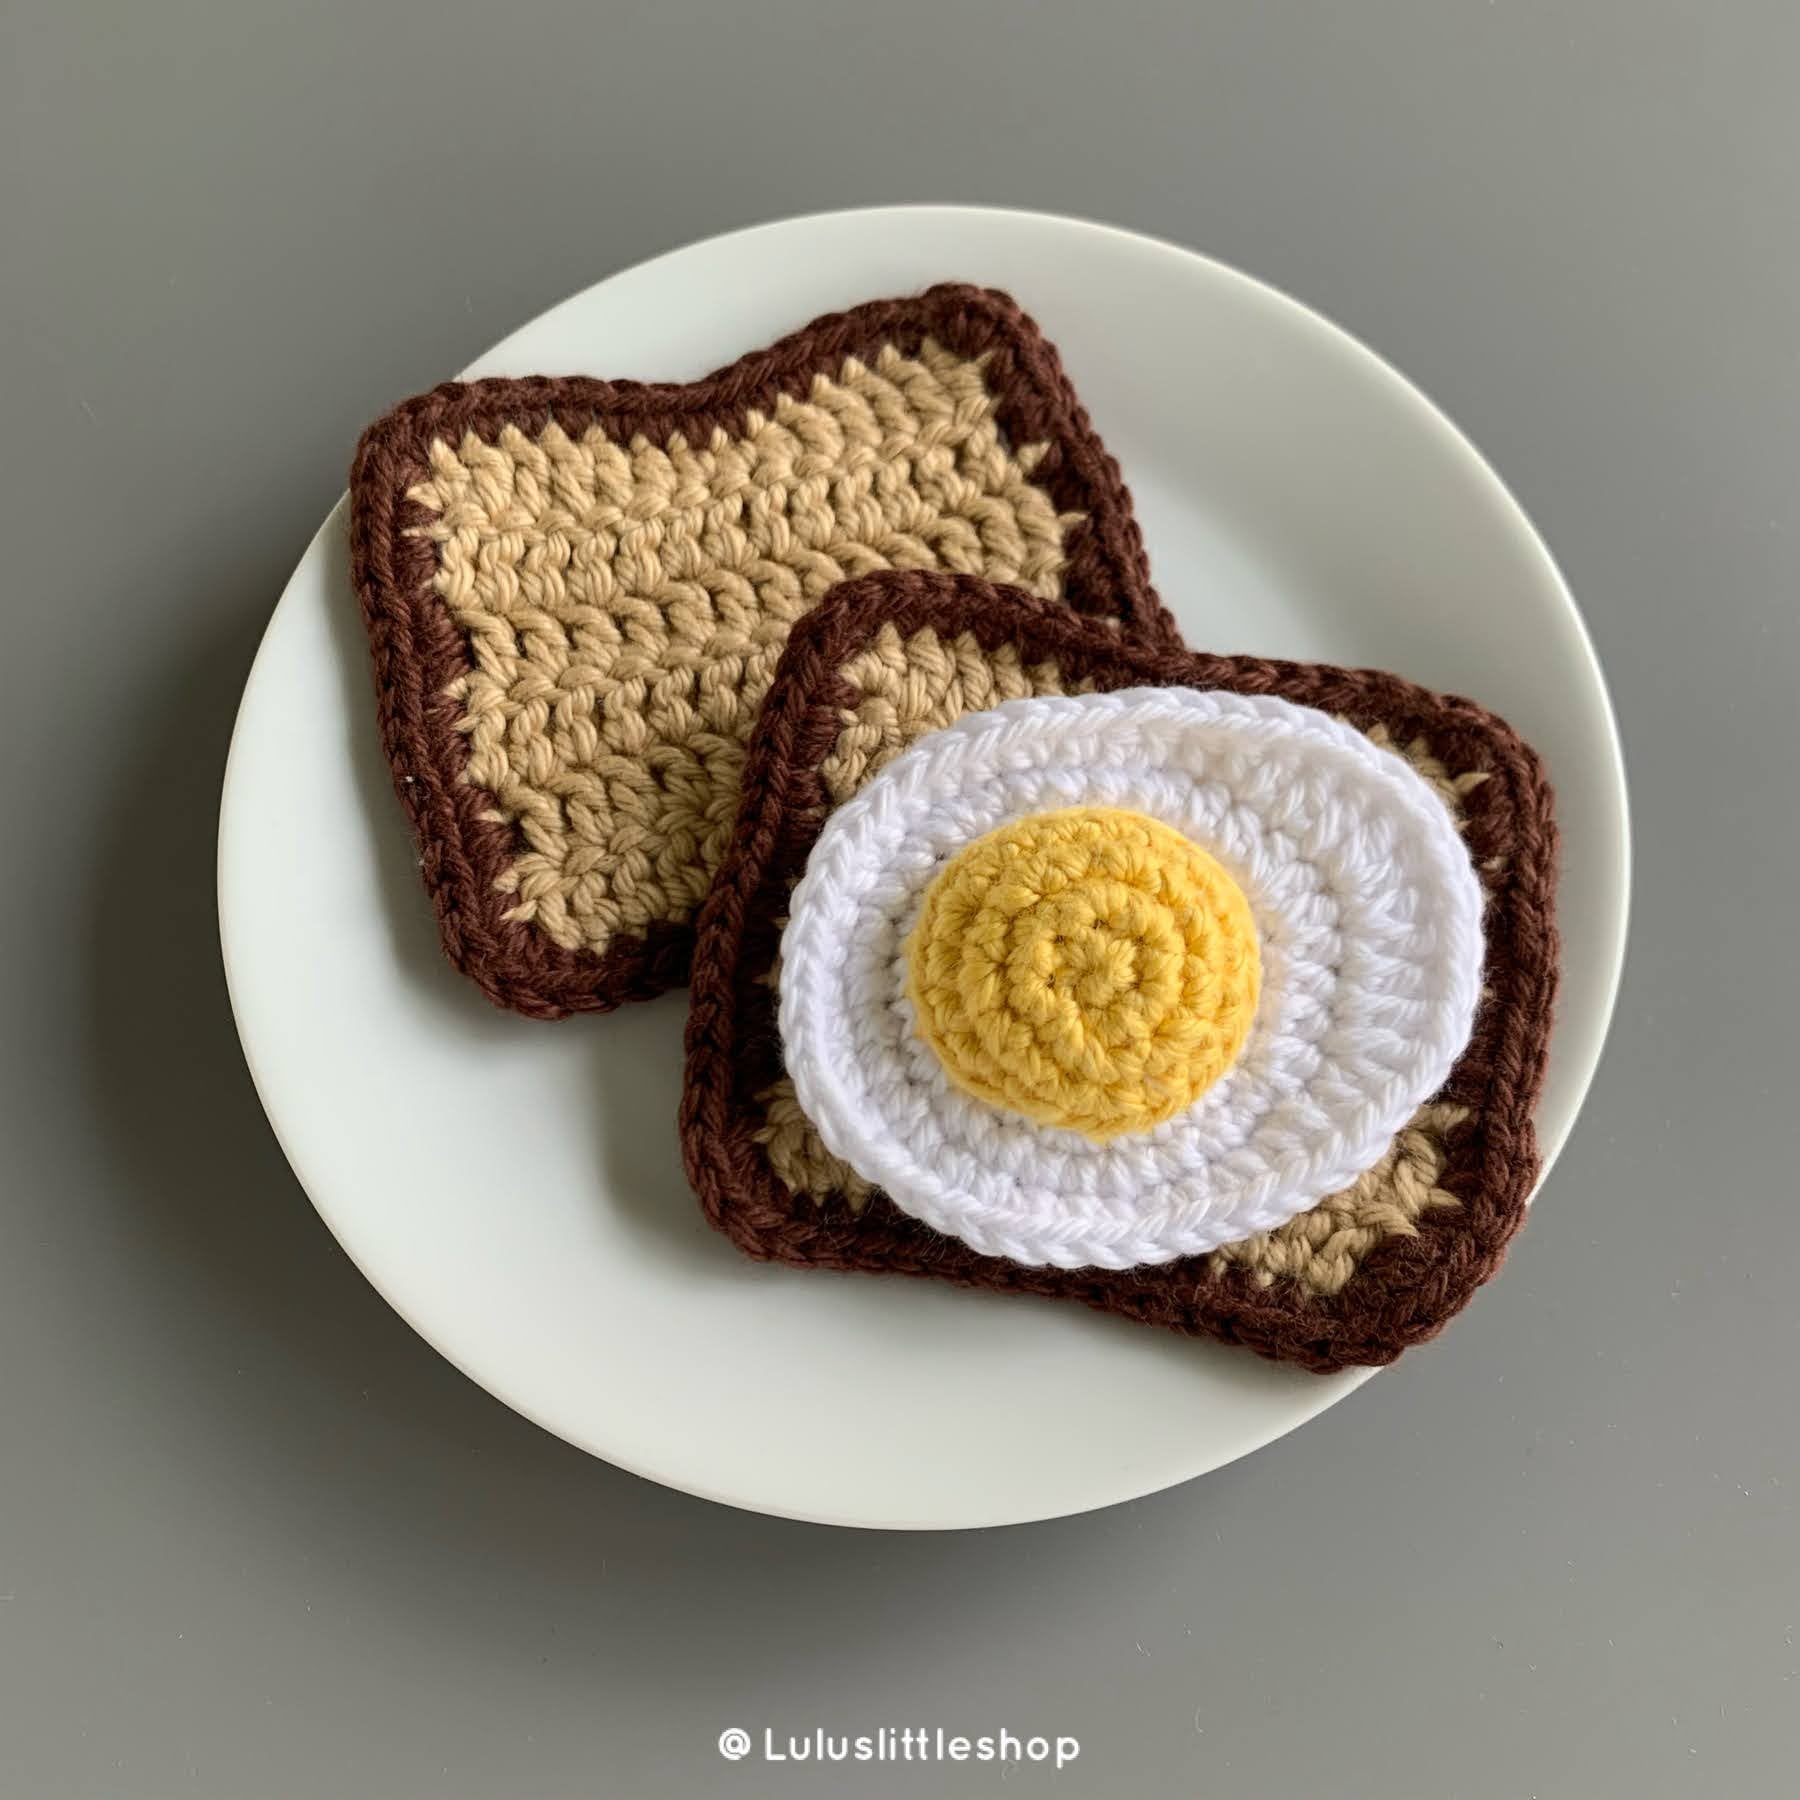 UPDATED Crochet Pattern: Apples 2 Sizes by Luluslittleshop 